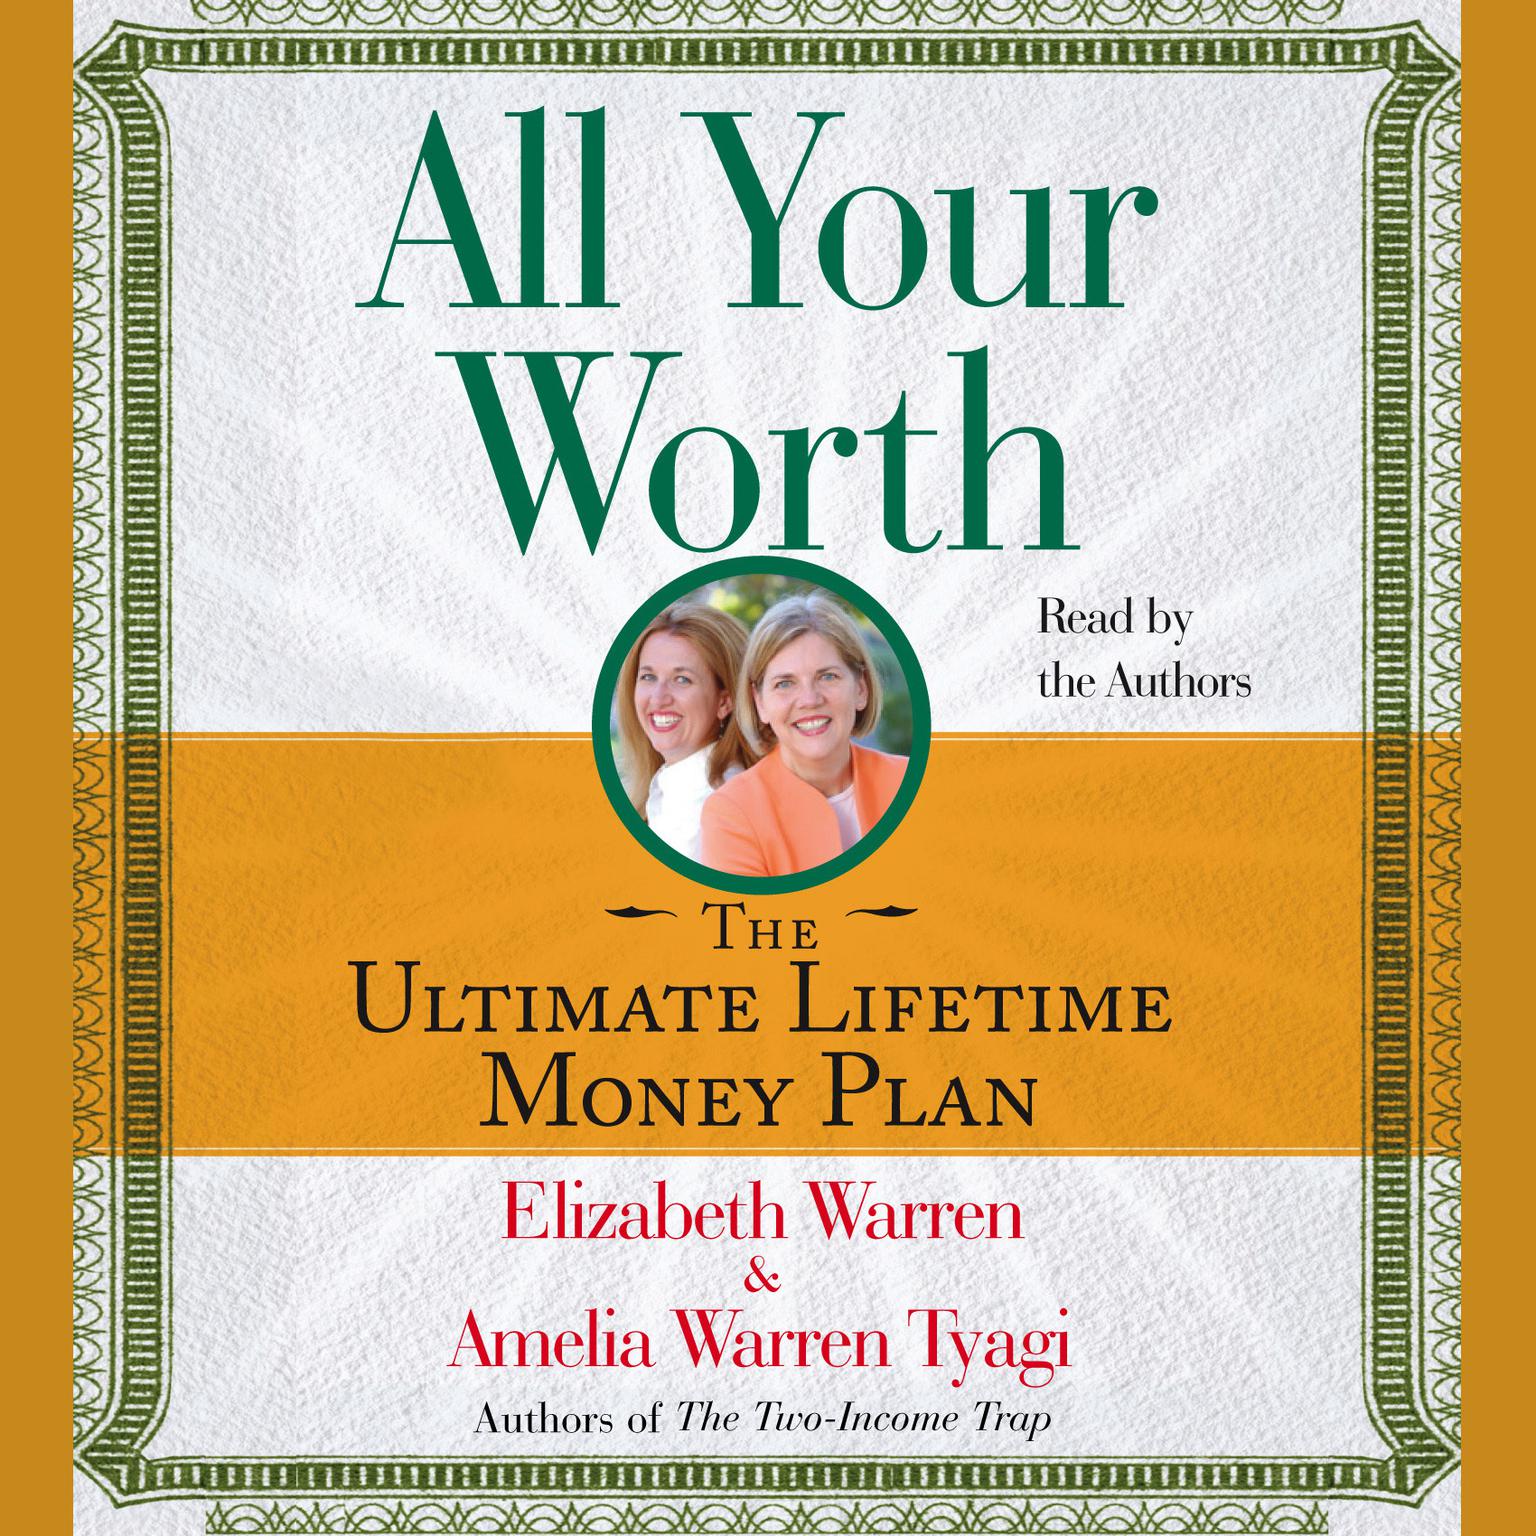 All Your Worth (Abridged): The Ultimate Lifetime Money Plan Audiobook, by Elizabeth Warren